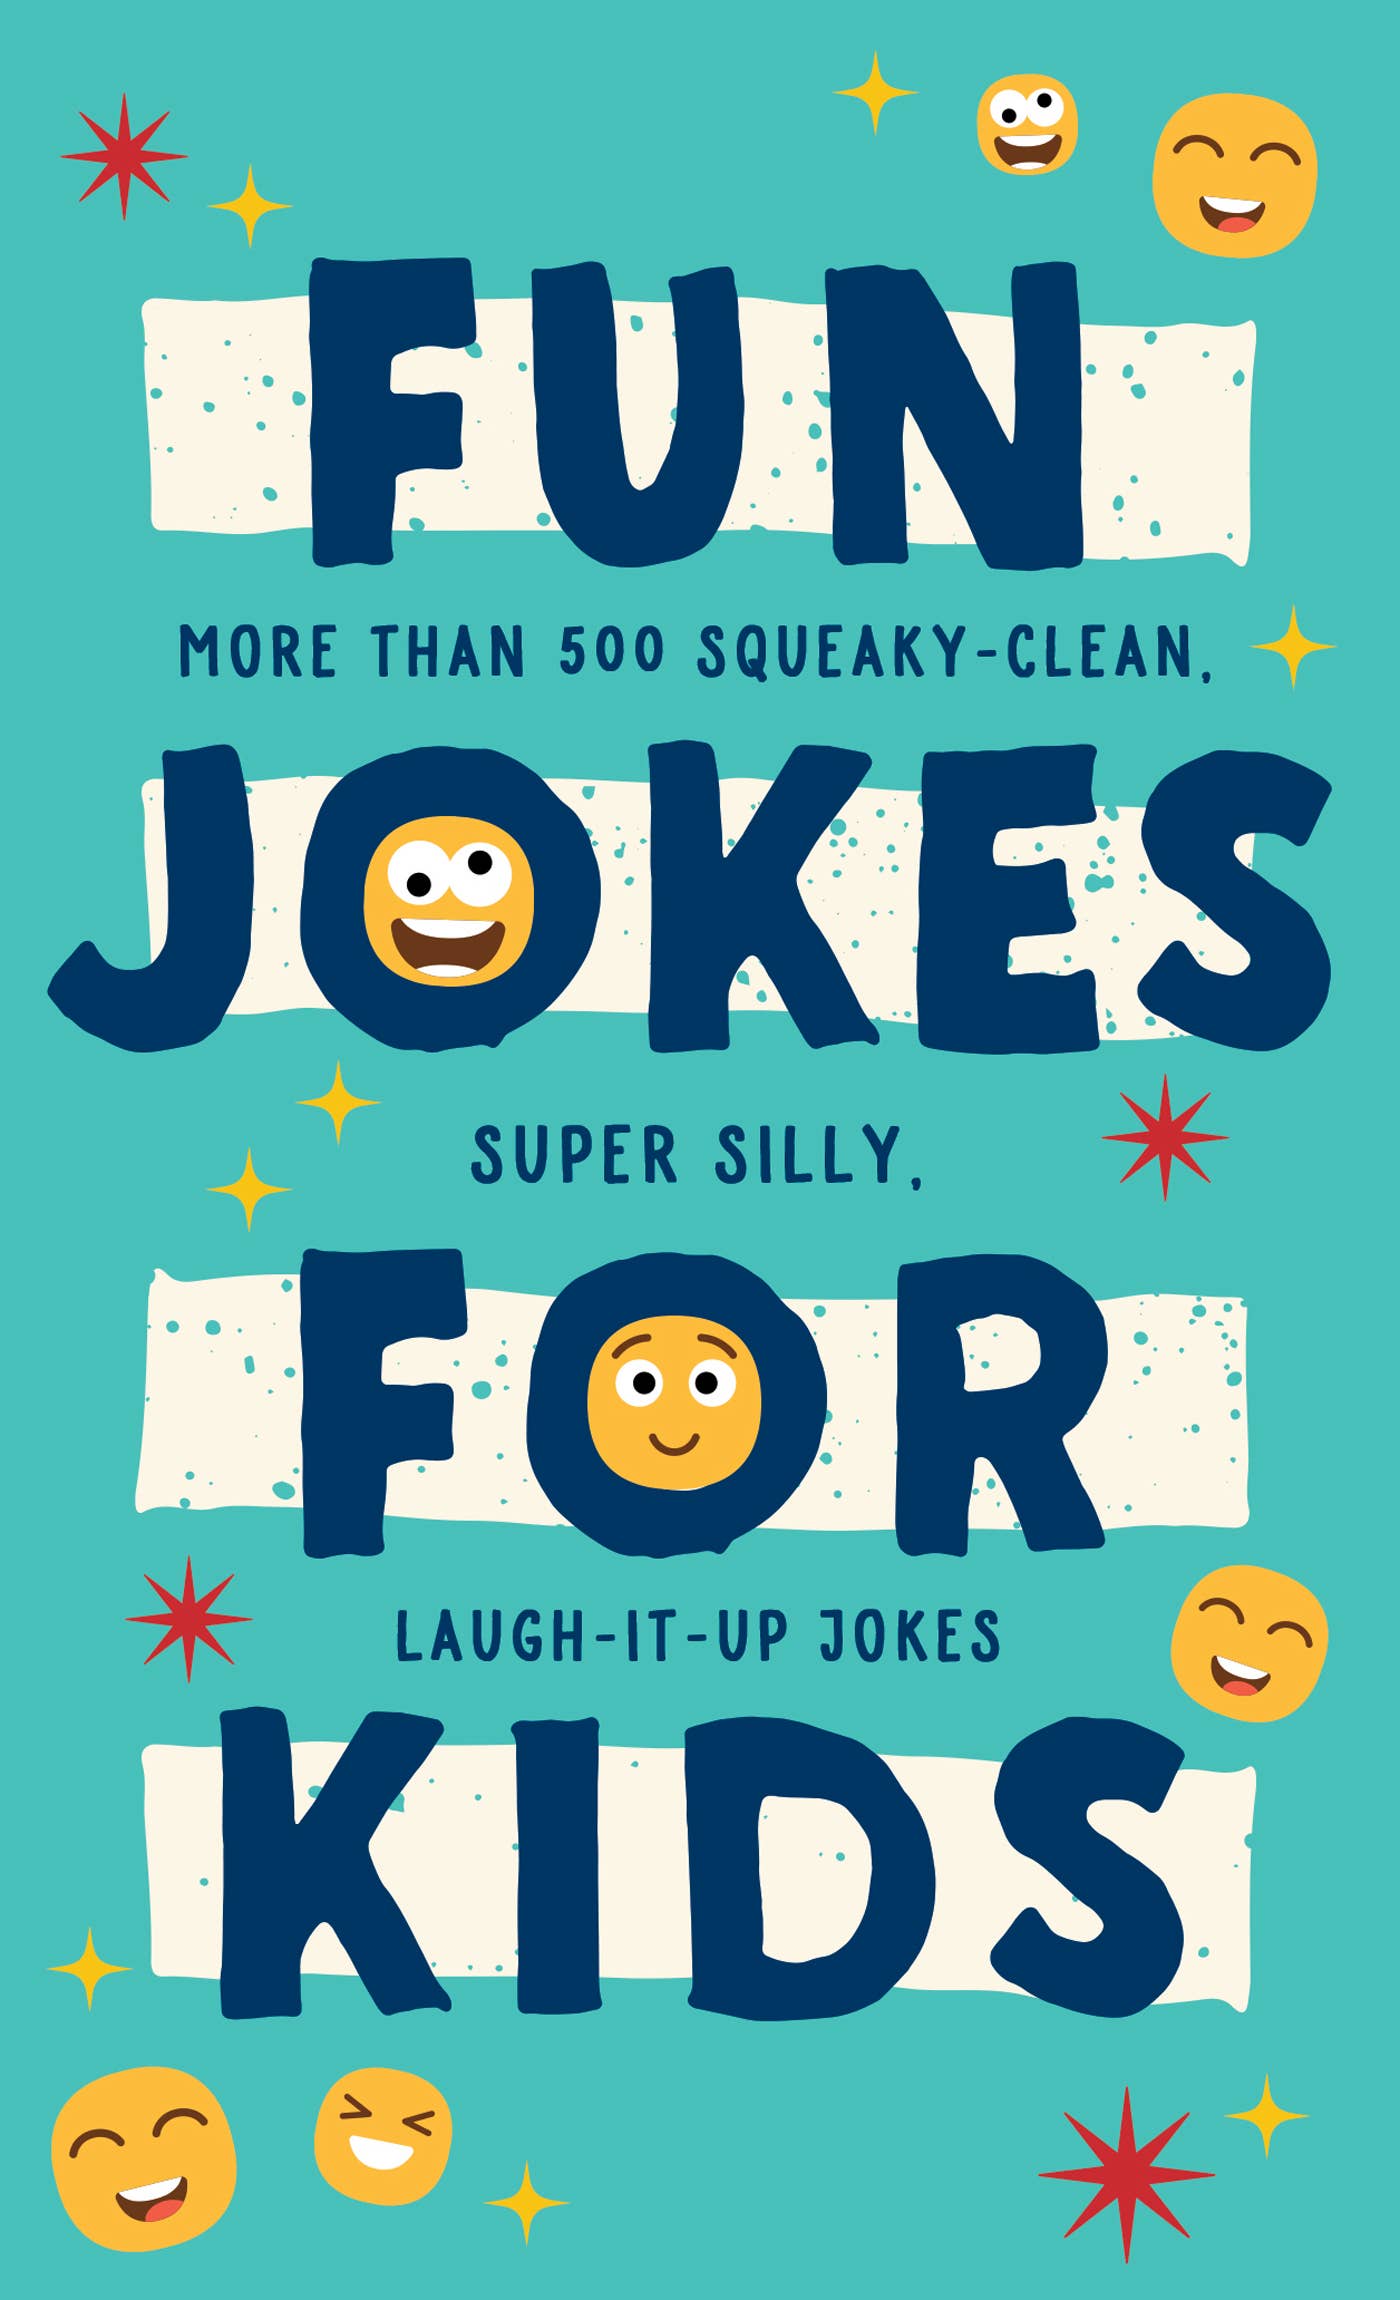 Fun Jokes for Kids : More Than 500 Squeaky-Clean, Super Sil